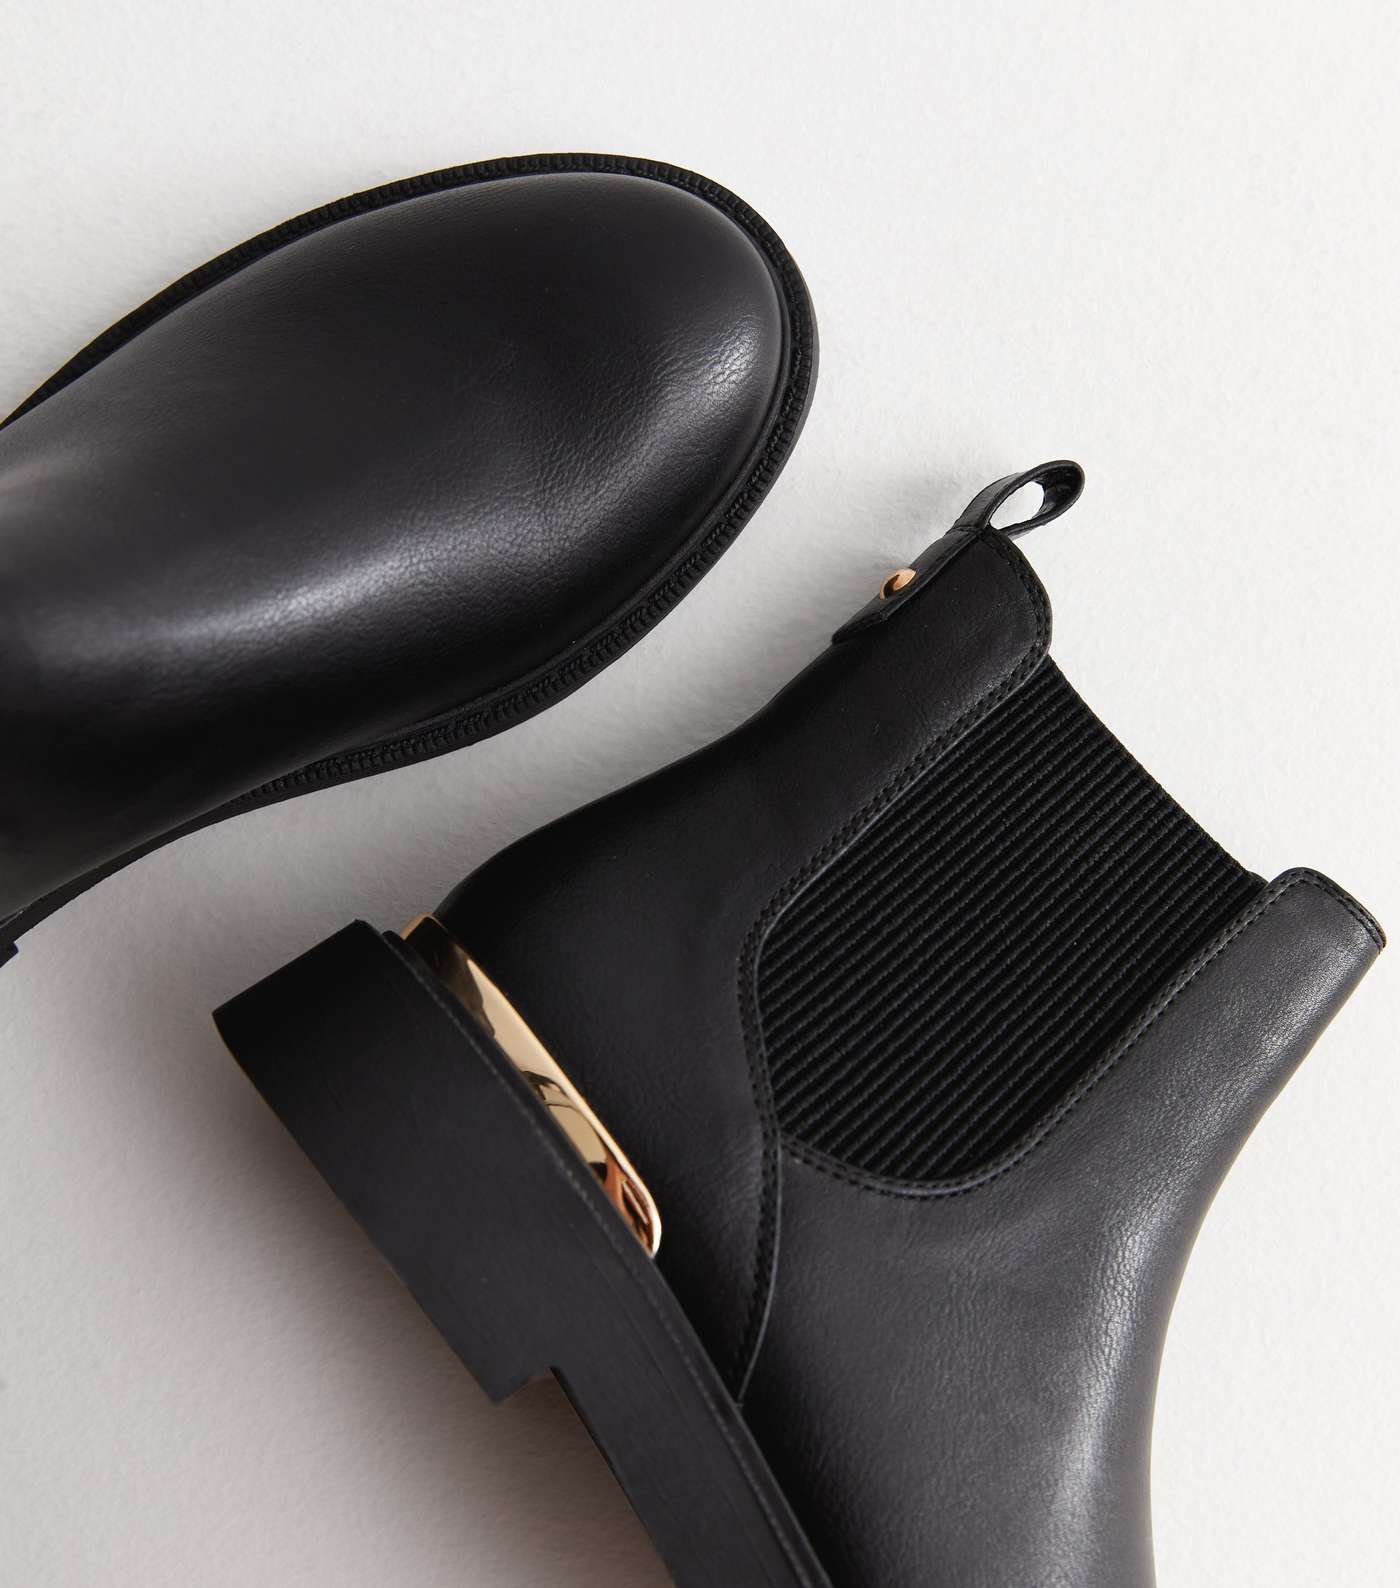 Black Leather-Look Metal Trim Chelsea Boots Image 3